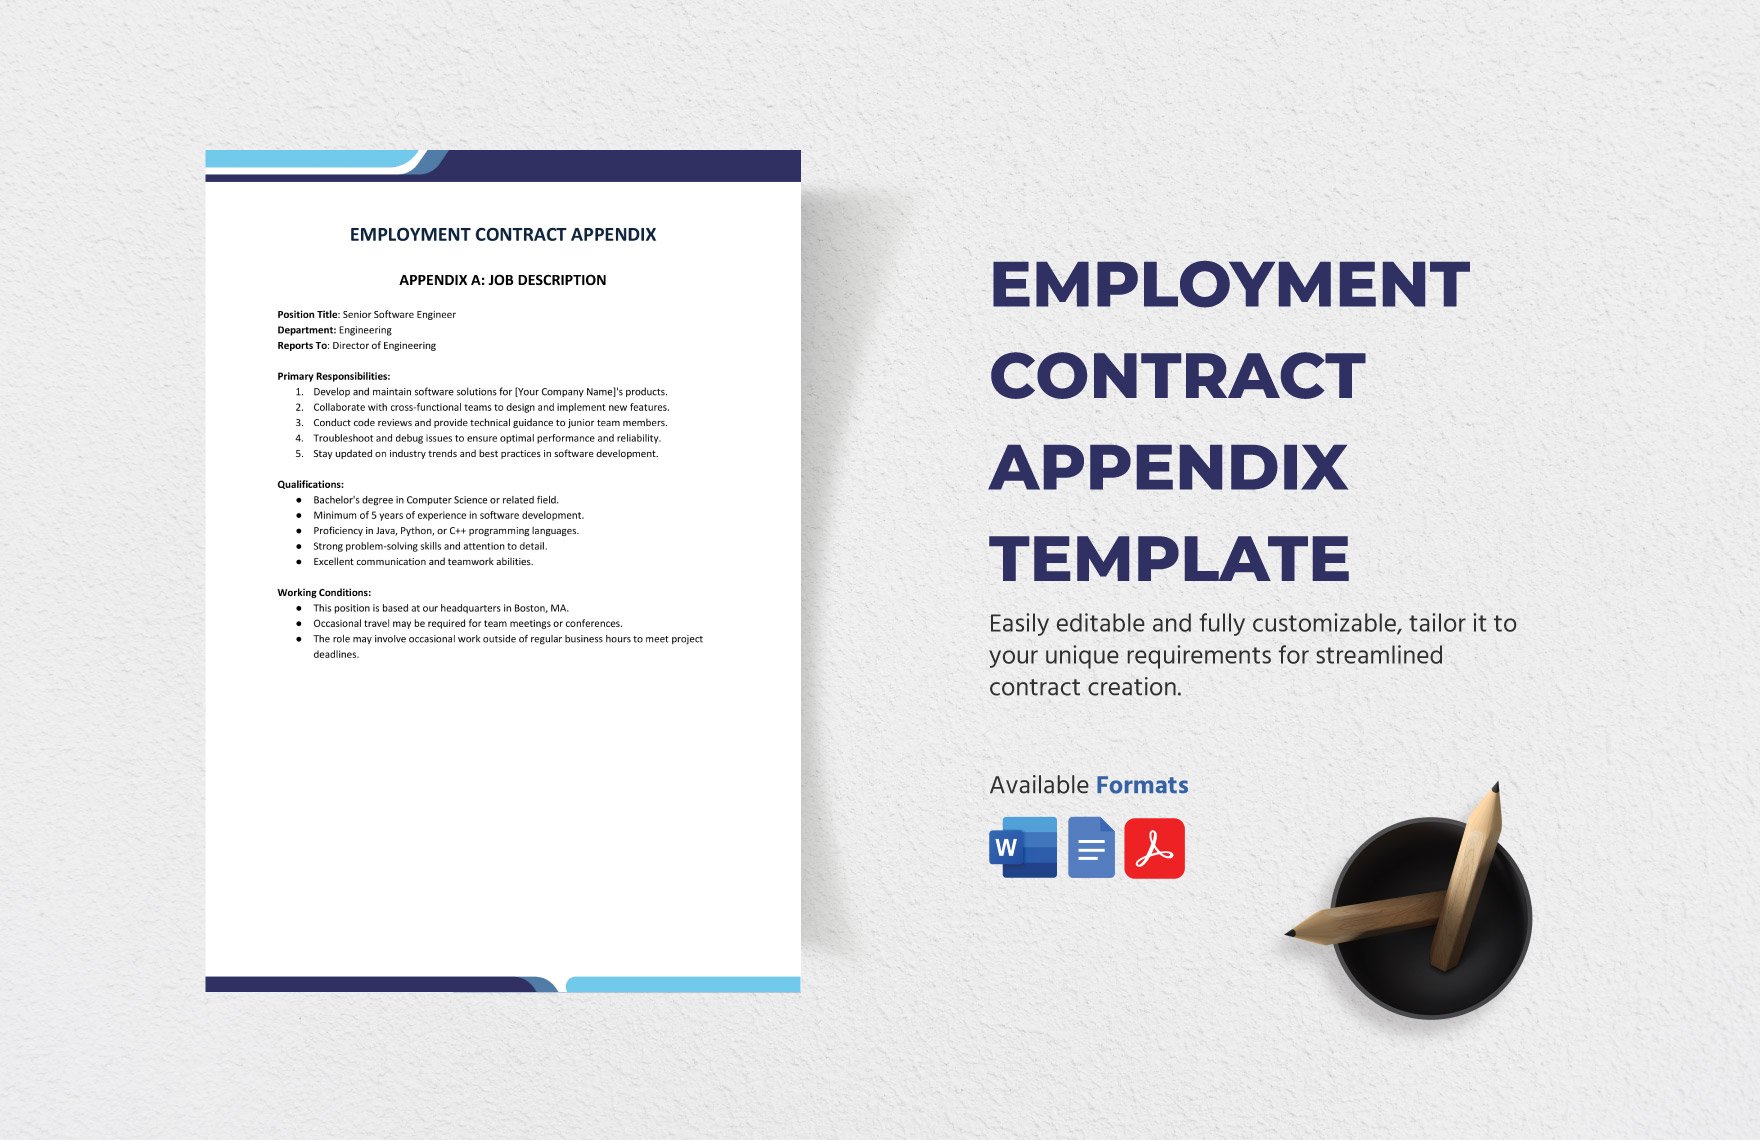 Employment Contract Appendix Template